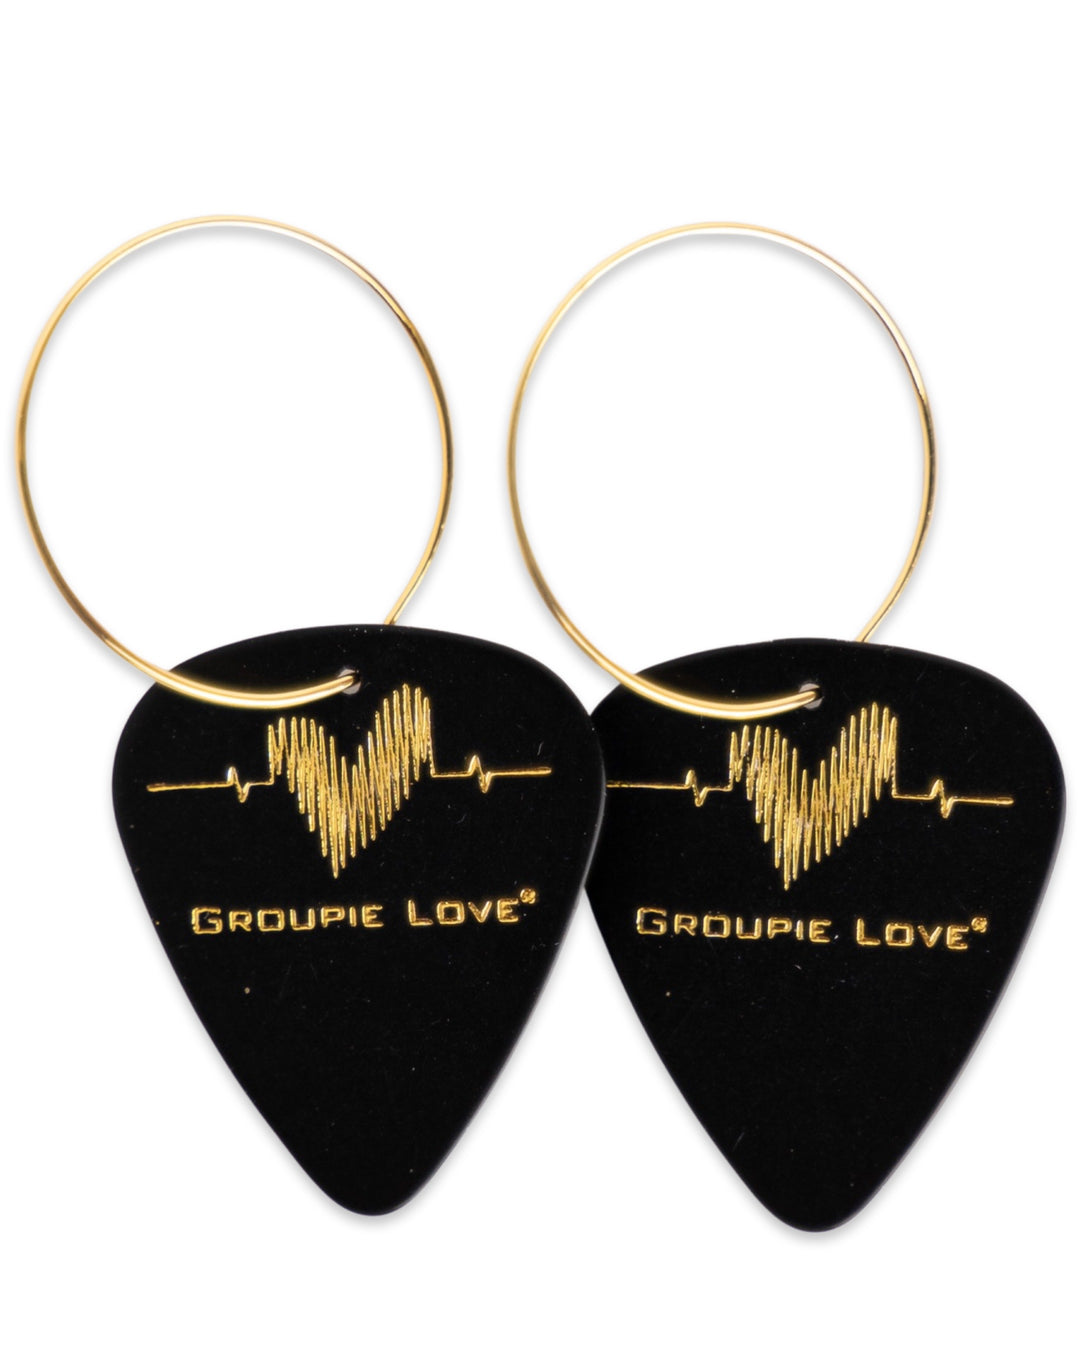 Groupie Love Black Gold Single Guitar Pick Earrings